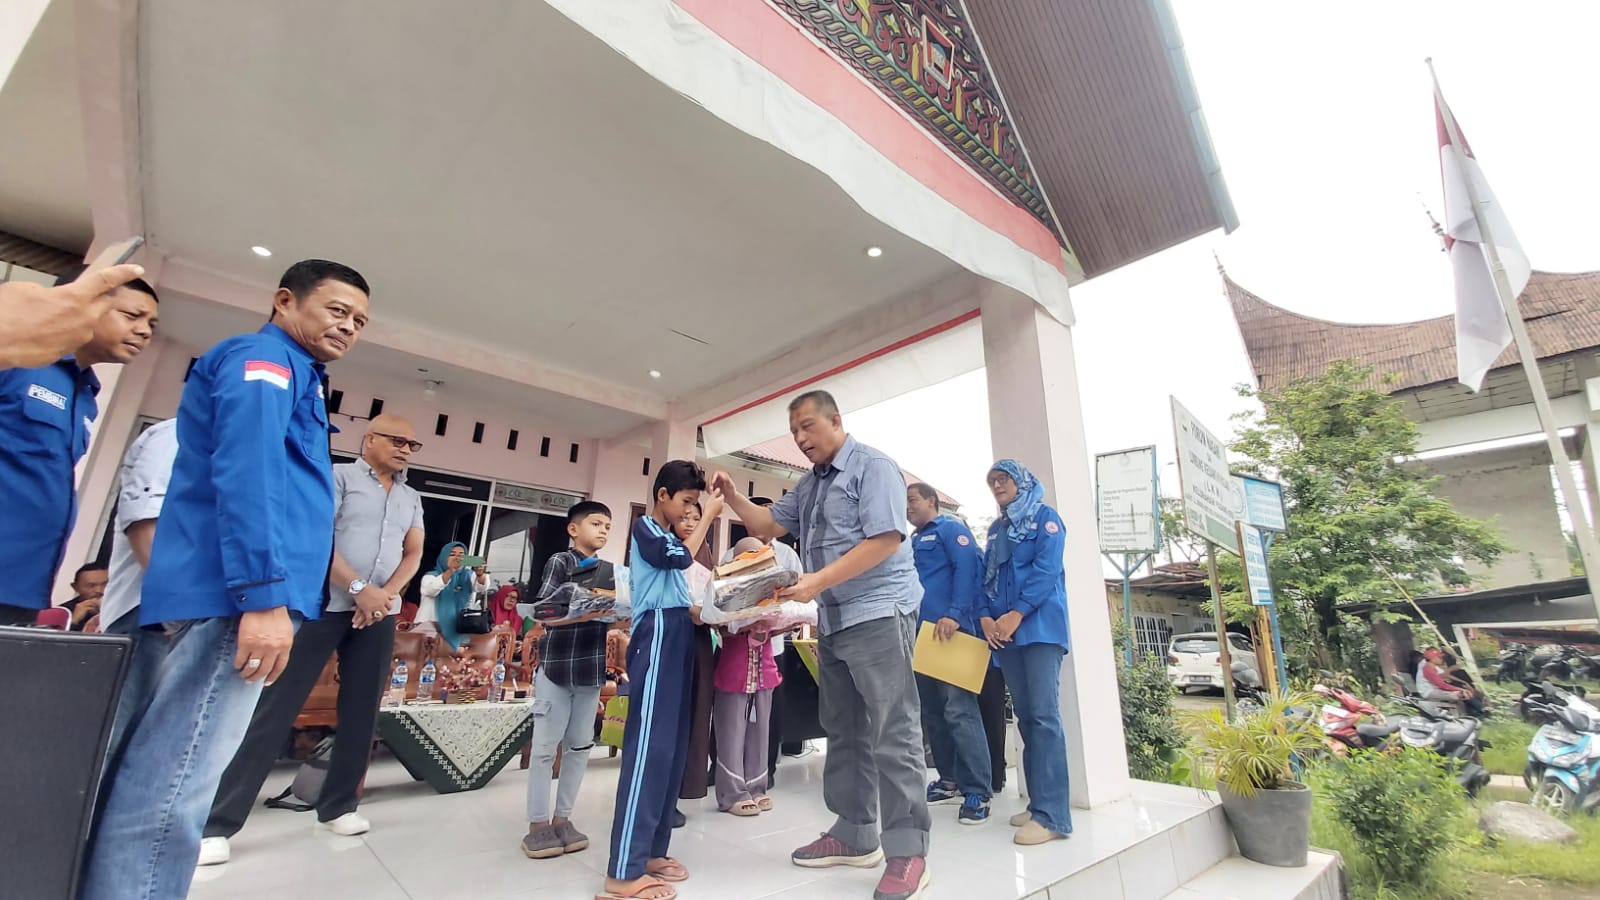 PT Semen Padang melalui Forum Nagari Kelurahan Padang Besi, menyalurkan bantuan perlengkapan sekolah sebanyak 121 paket